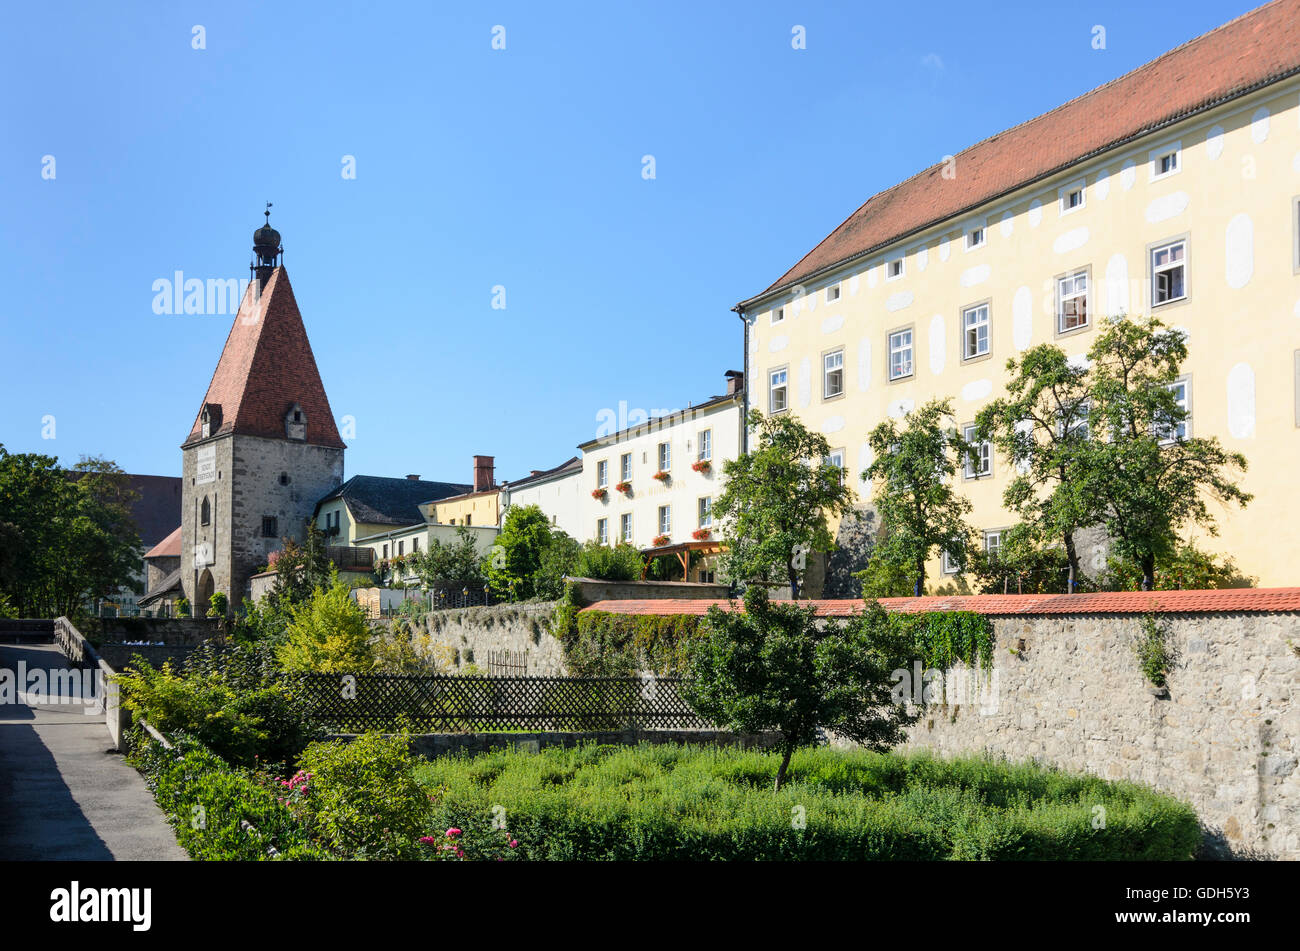 Freistadt : porte de ville Linzertor, rampart, Autriche, Niederösterreich, Autriche supérieure, Muehlviertel Banque D'Images